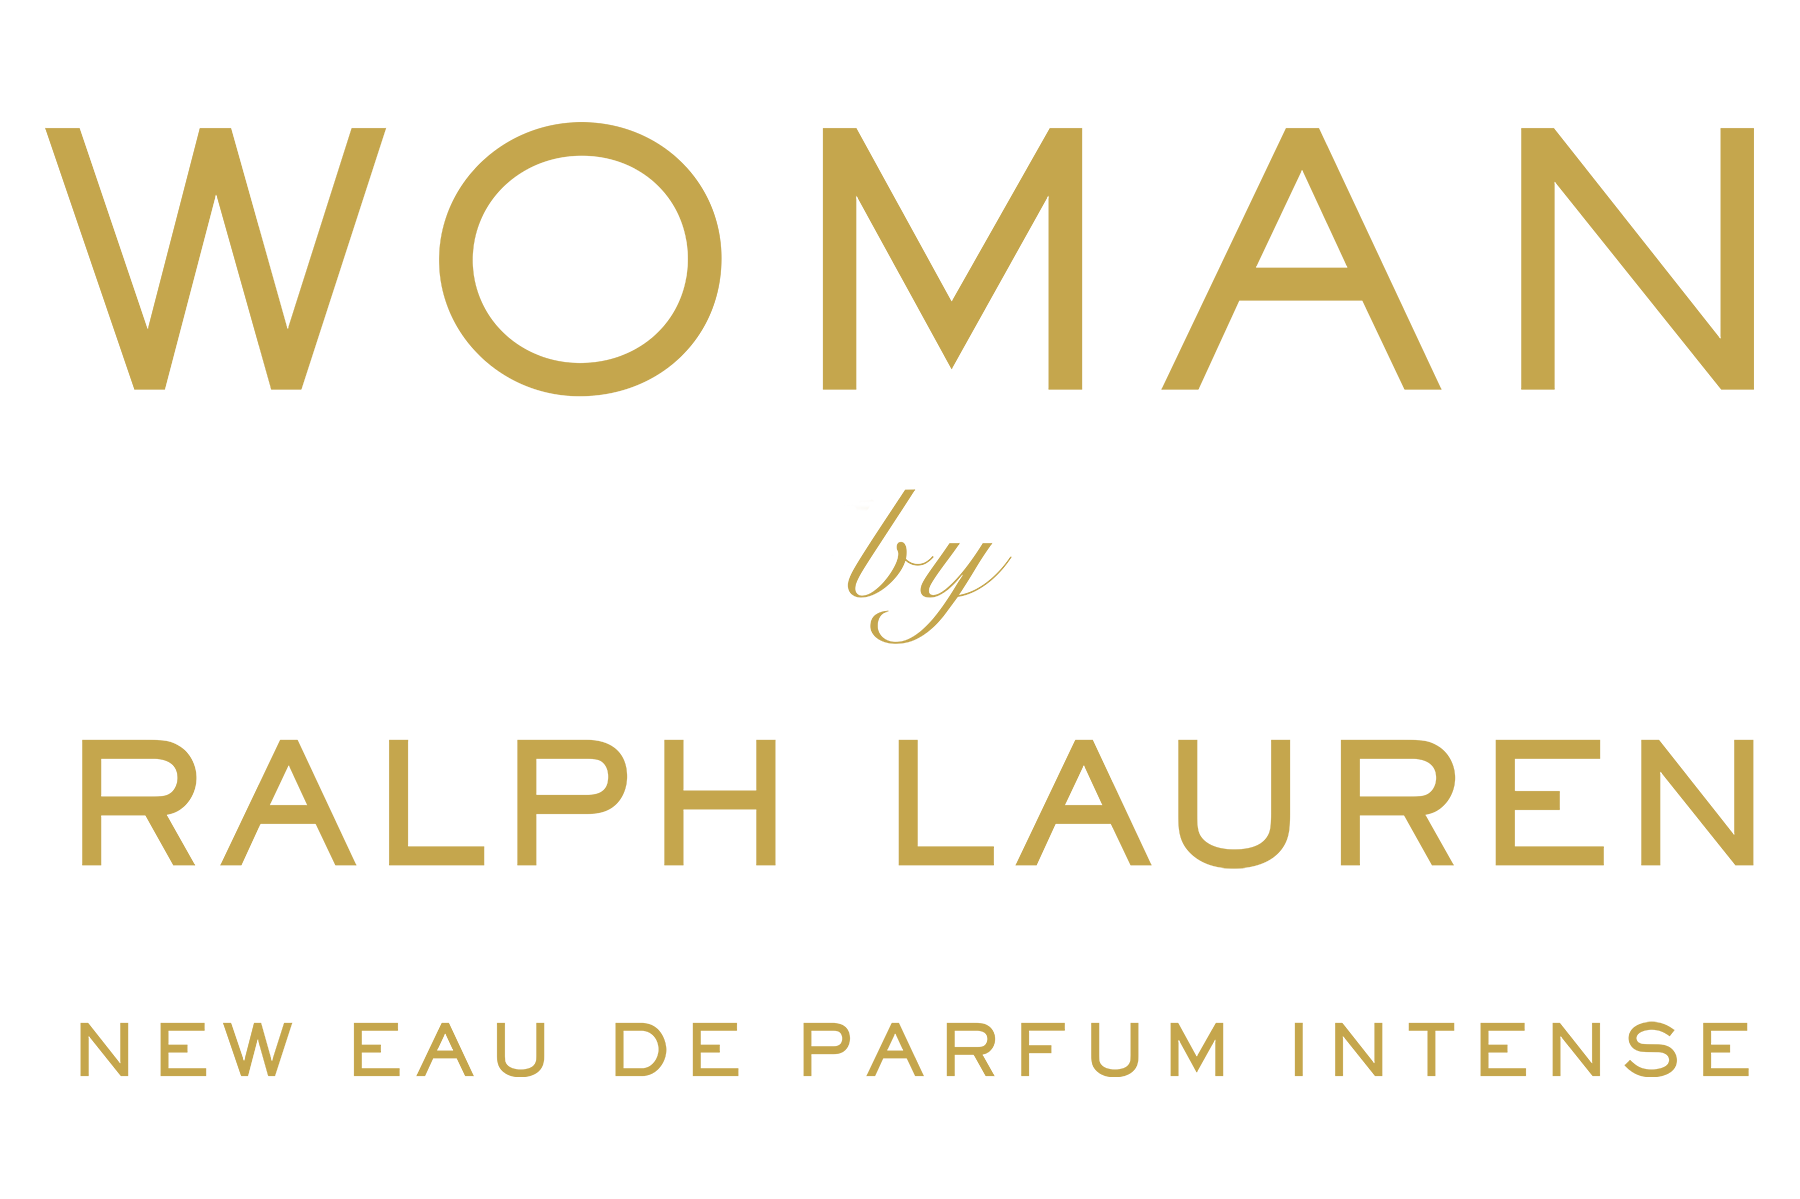 ralph lauren fragrances logo